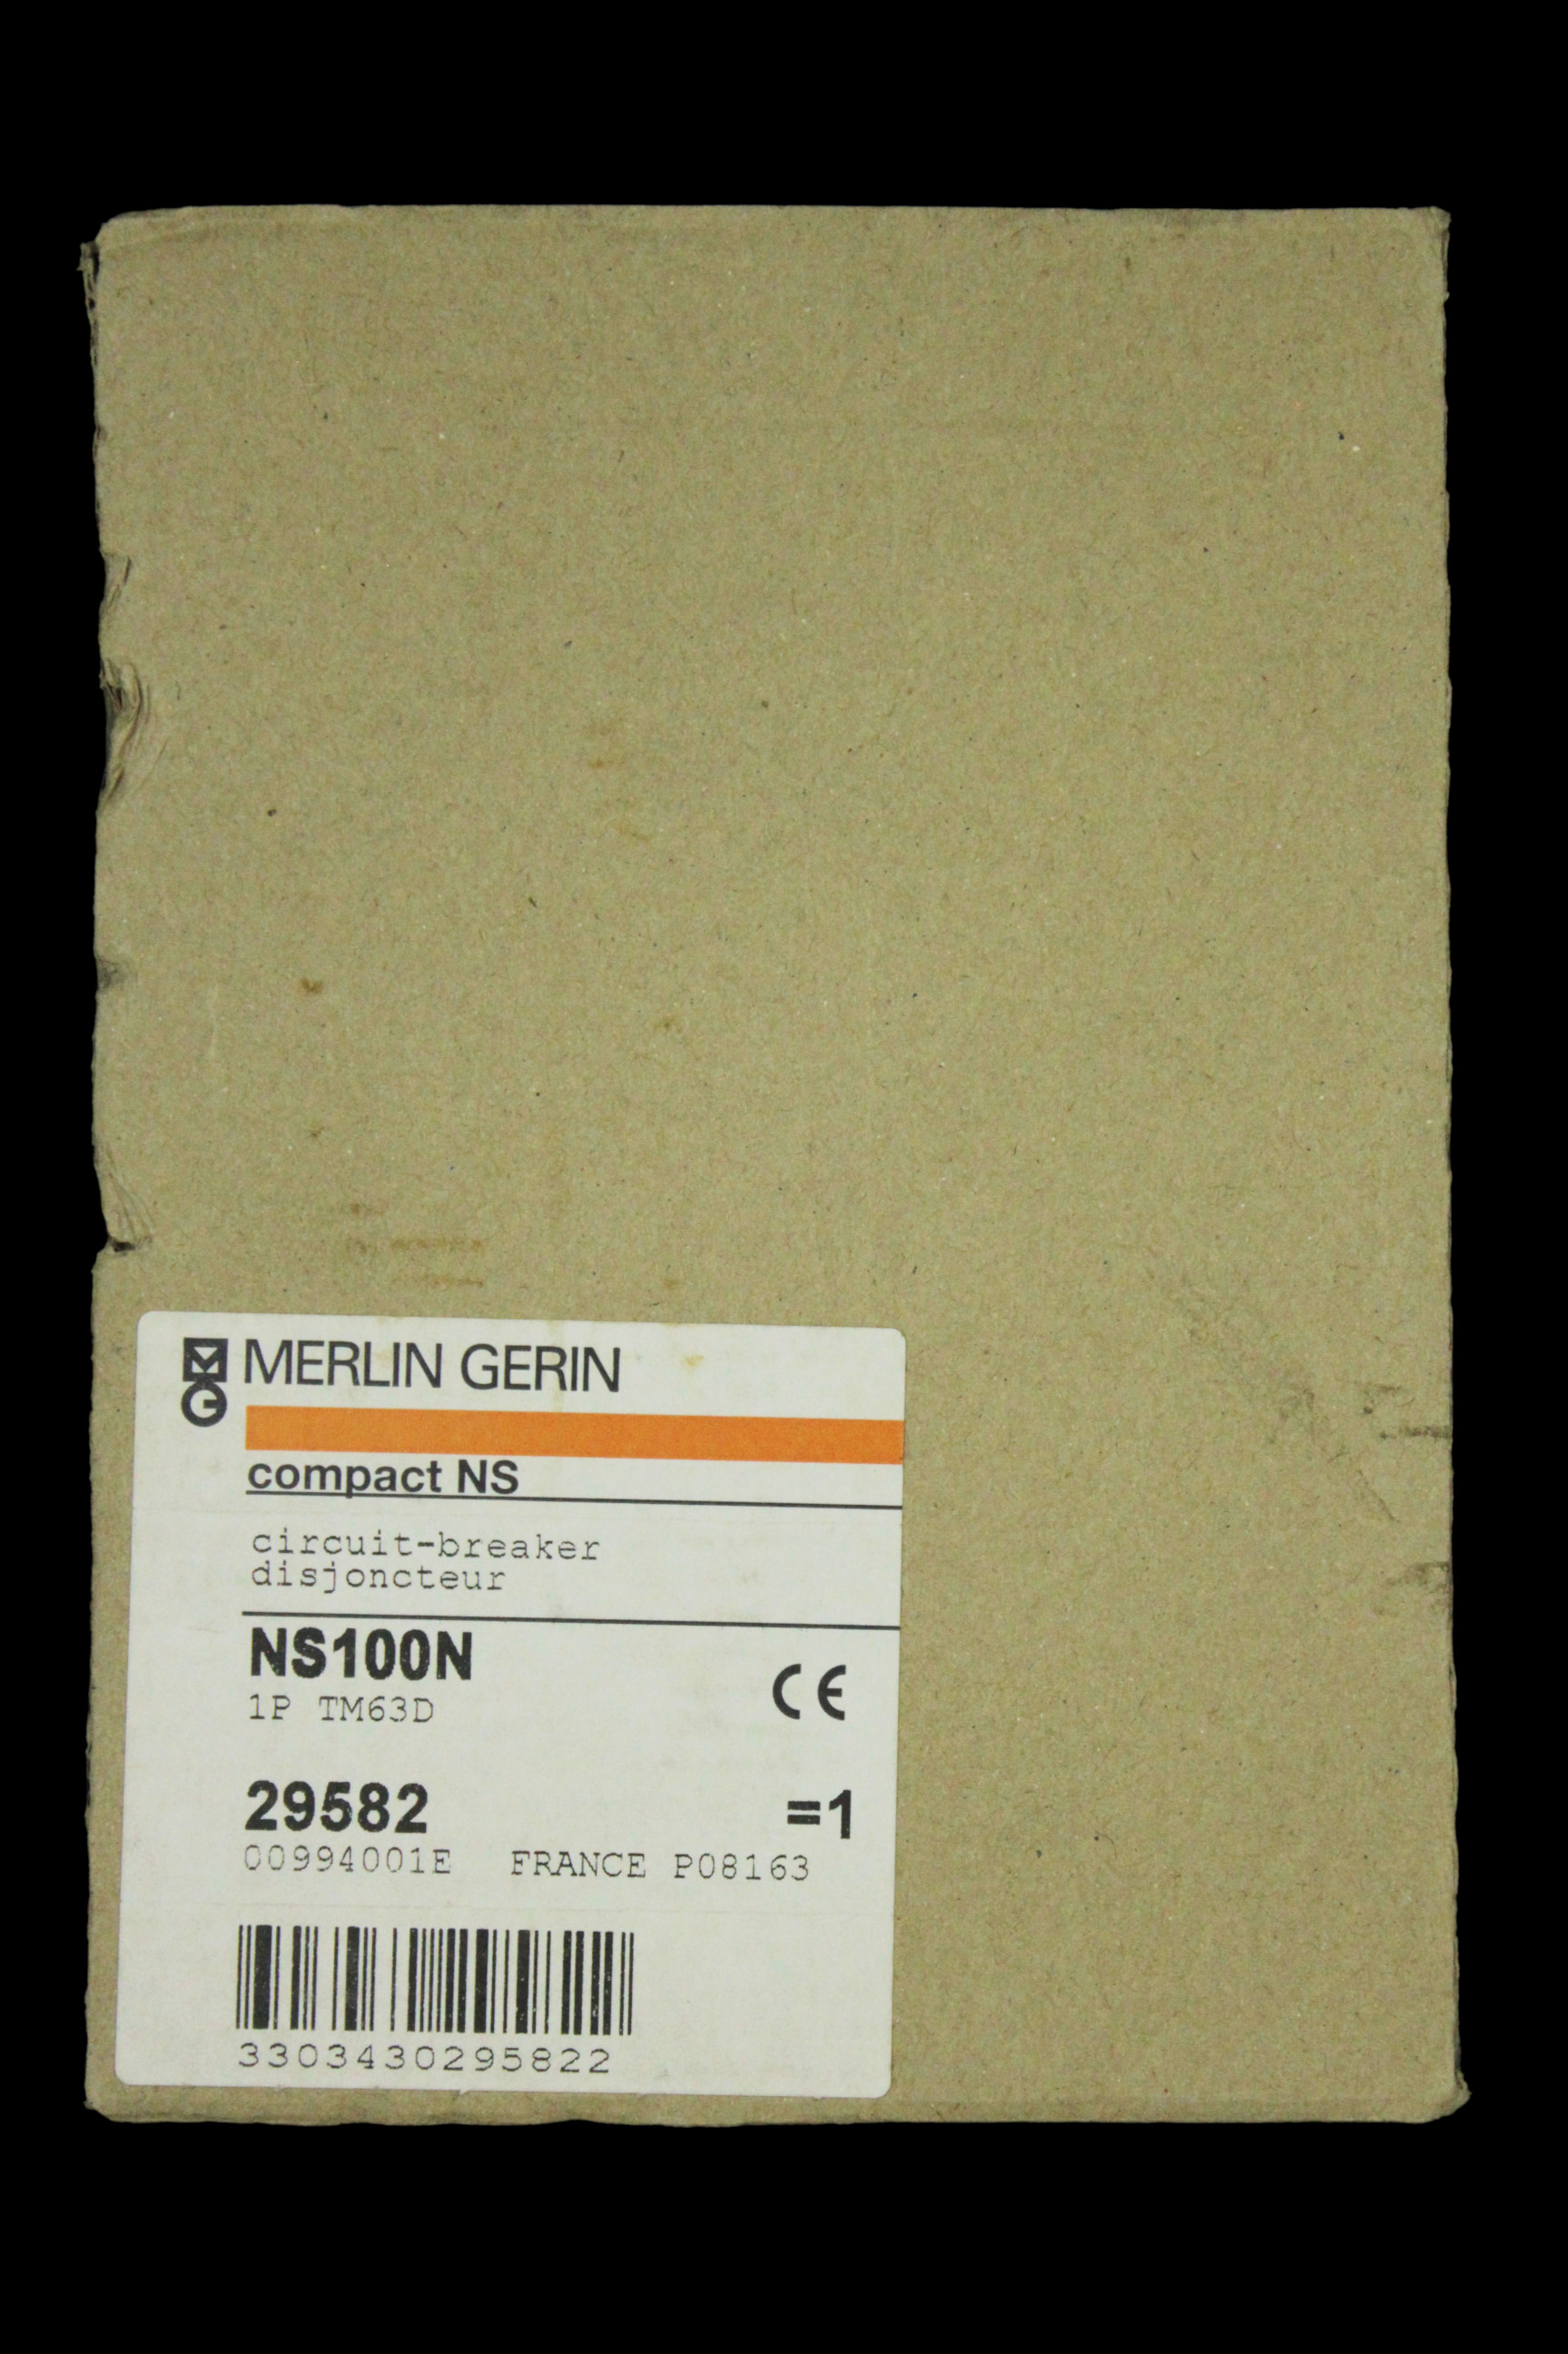 MERLIN GERIN 63 AMP 25kA MCCB NS100N 29582